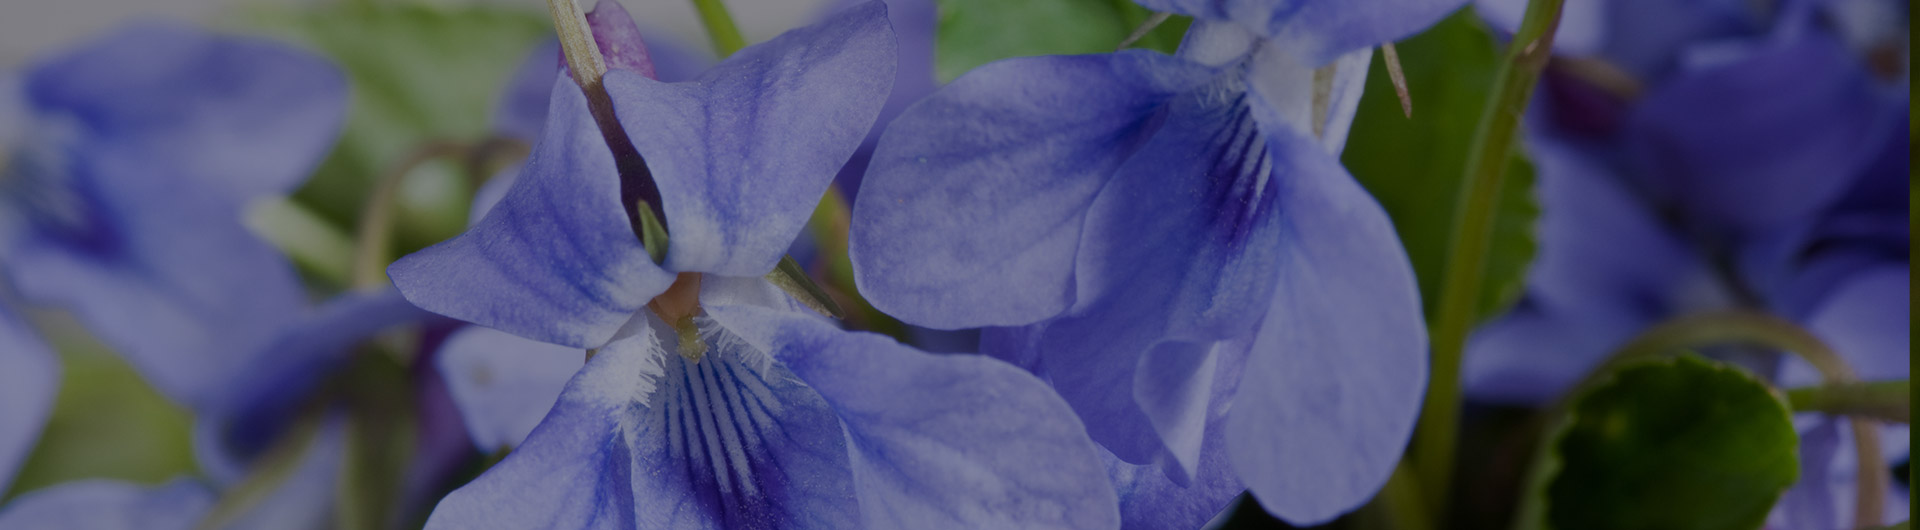 Common blue violet, Rhode Island's state flower.